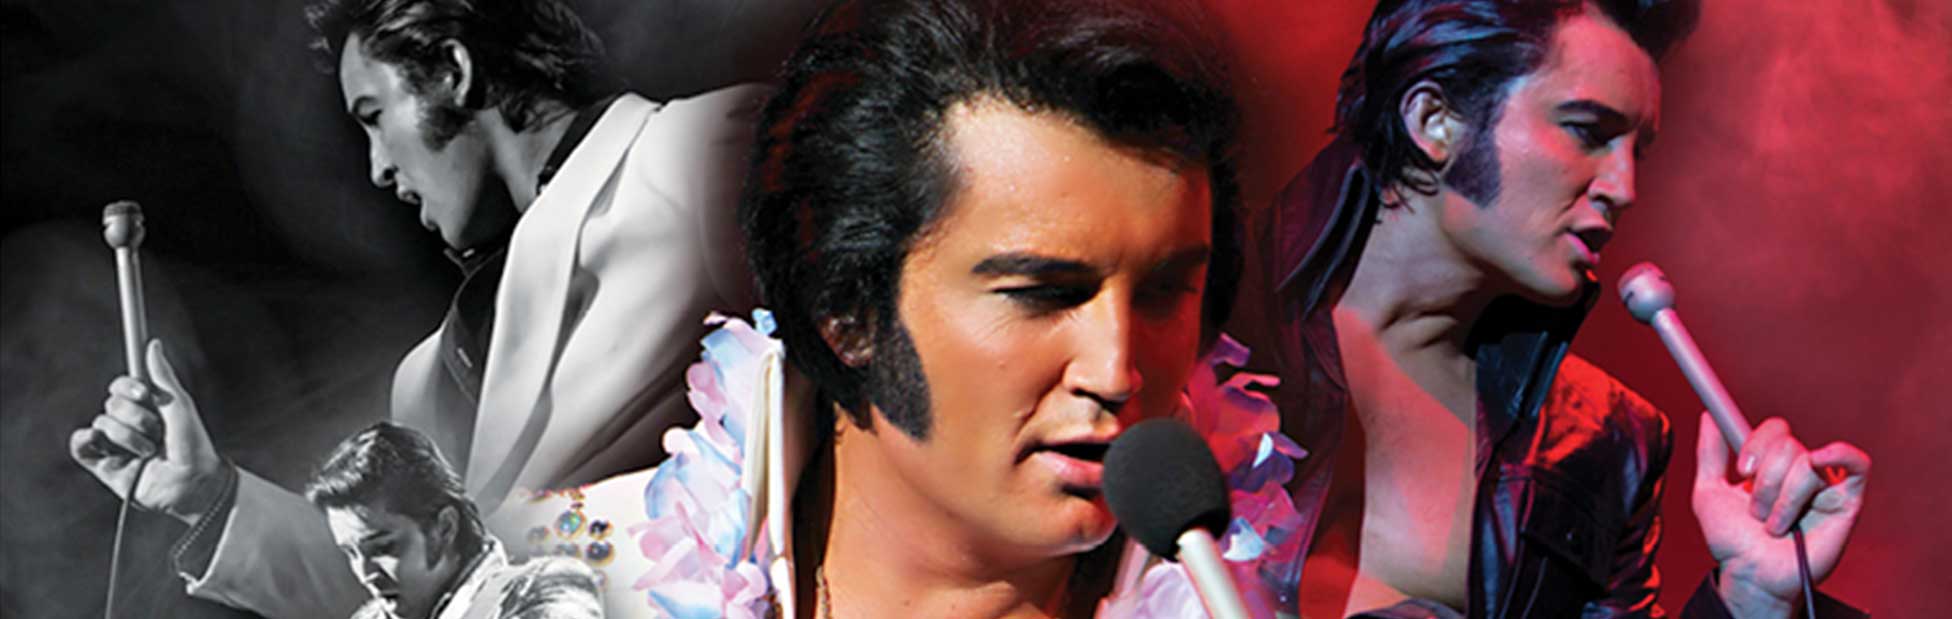 Ben Portsmouth performing as Elvis